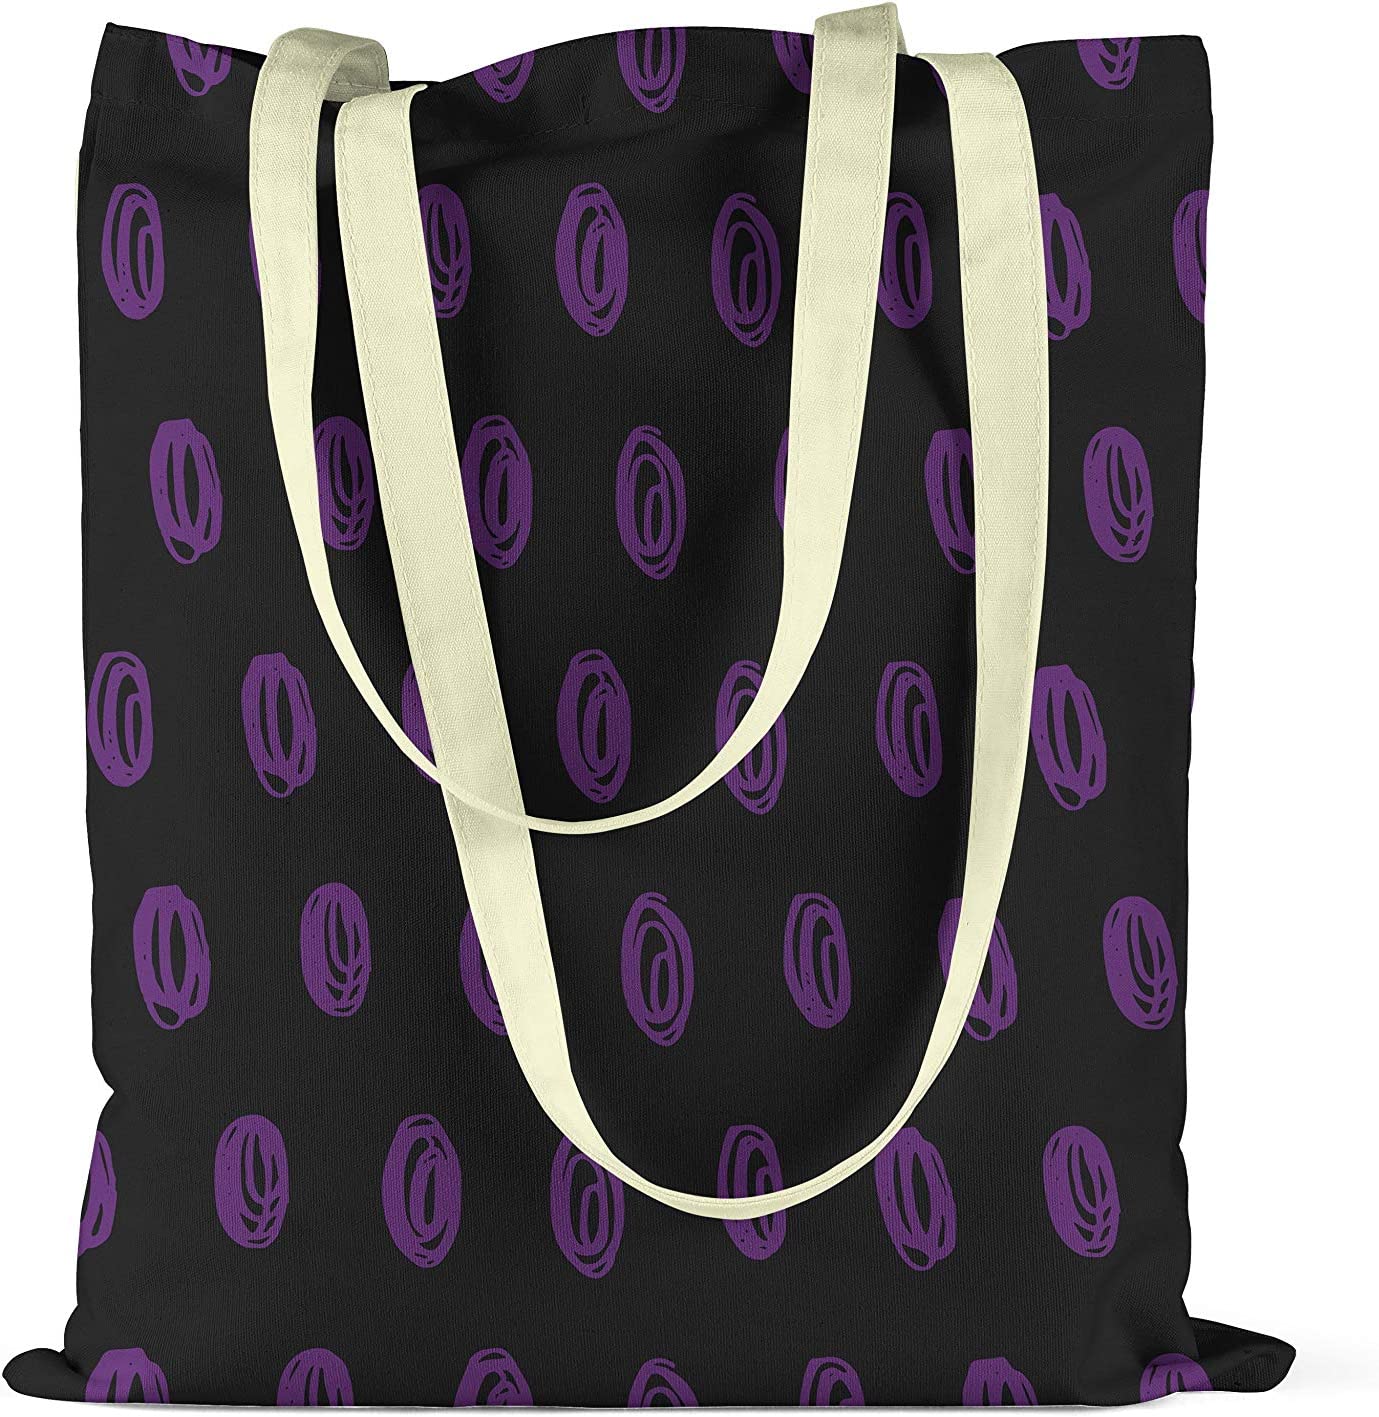 Bonamaison Purple Spiral Design Printed Light Grey Tote Bag 34 x 40cm RRP 5.99 CLEARANCE XL 3.99